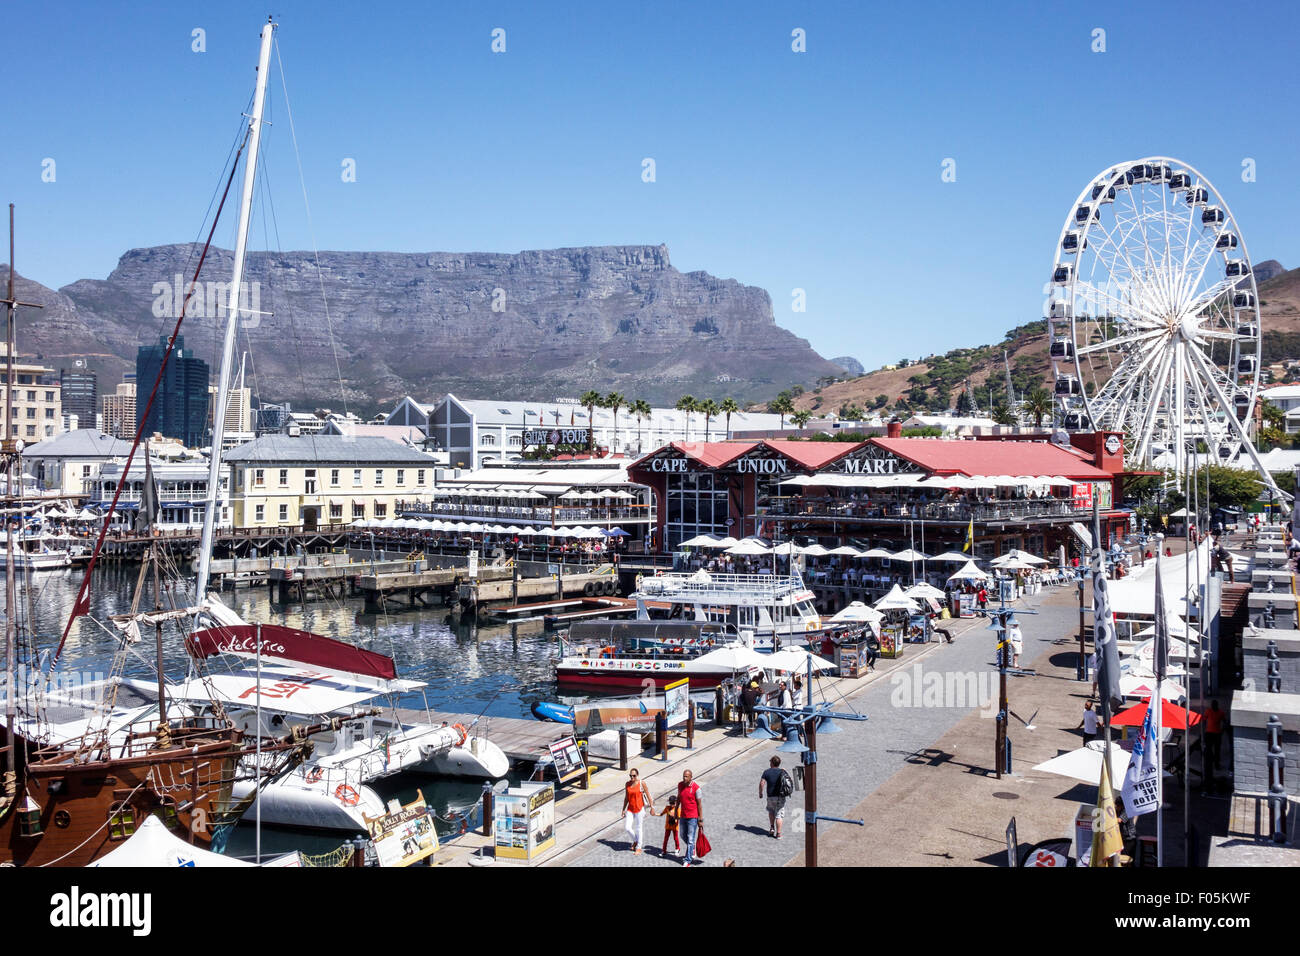 Kapstadt Südafrika, V & A Victoria Alfred Waterfront, Table Bay Hafen, Hafen, Tafelberg, Cape Wheel, Ferris, Cape Union Mart, SAfri150310049 Stockfoto